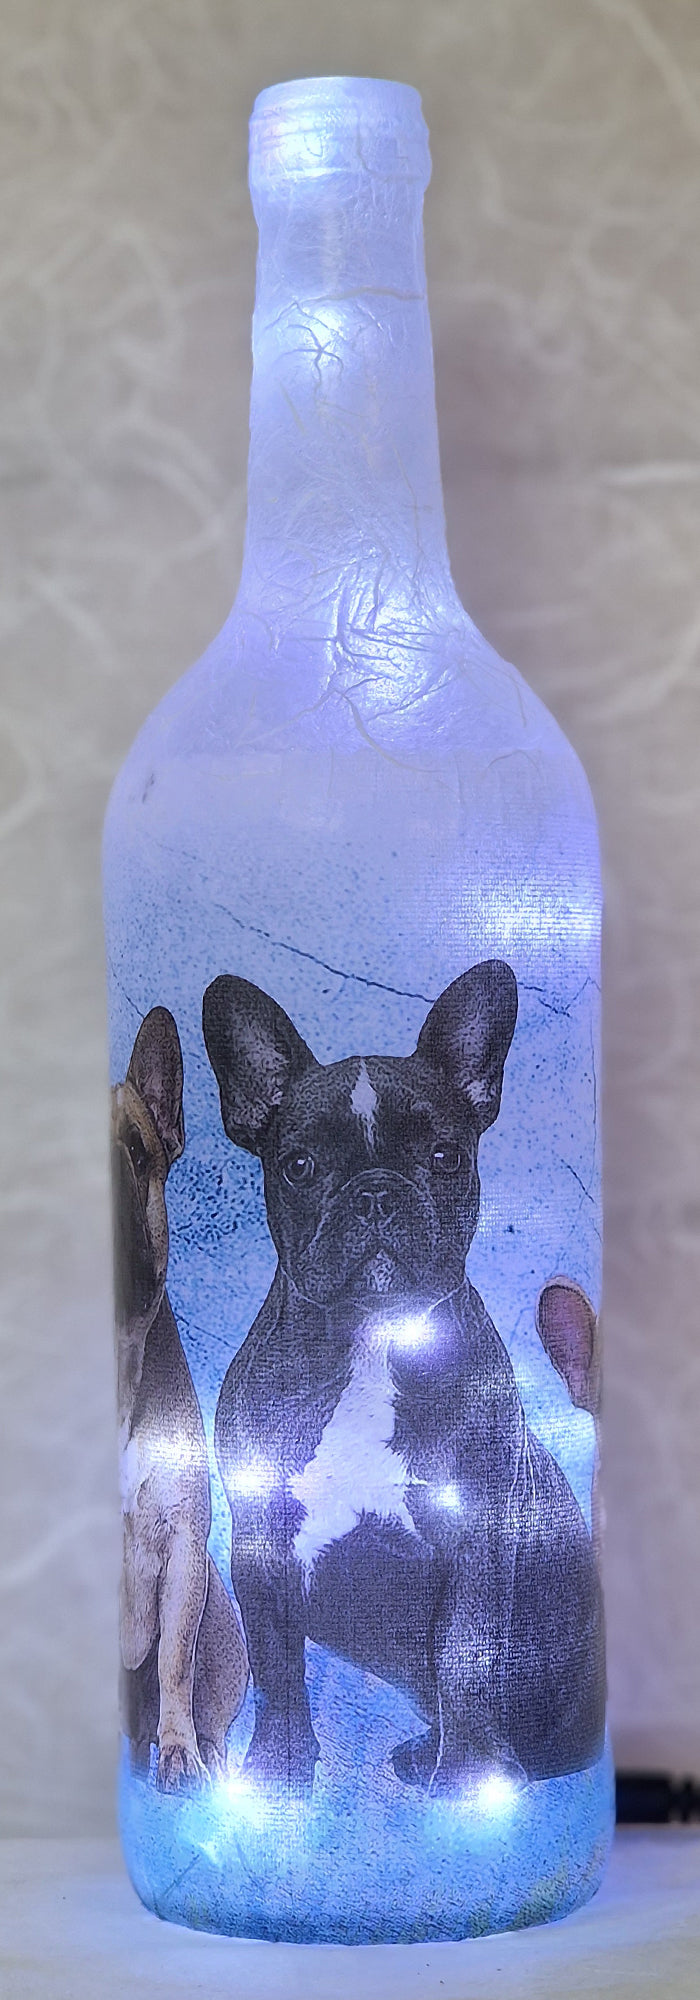 French Bulldog - Hand Made Lamp